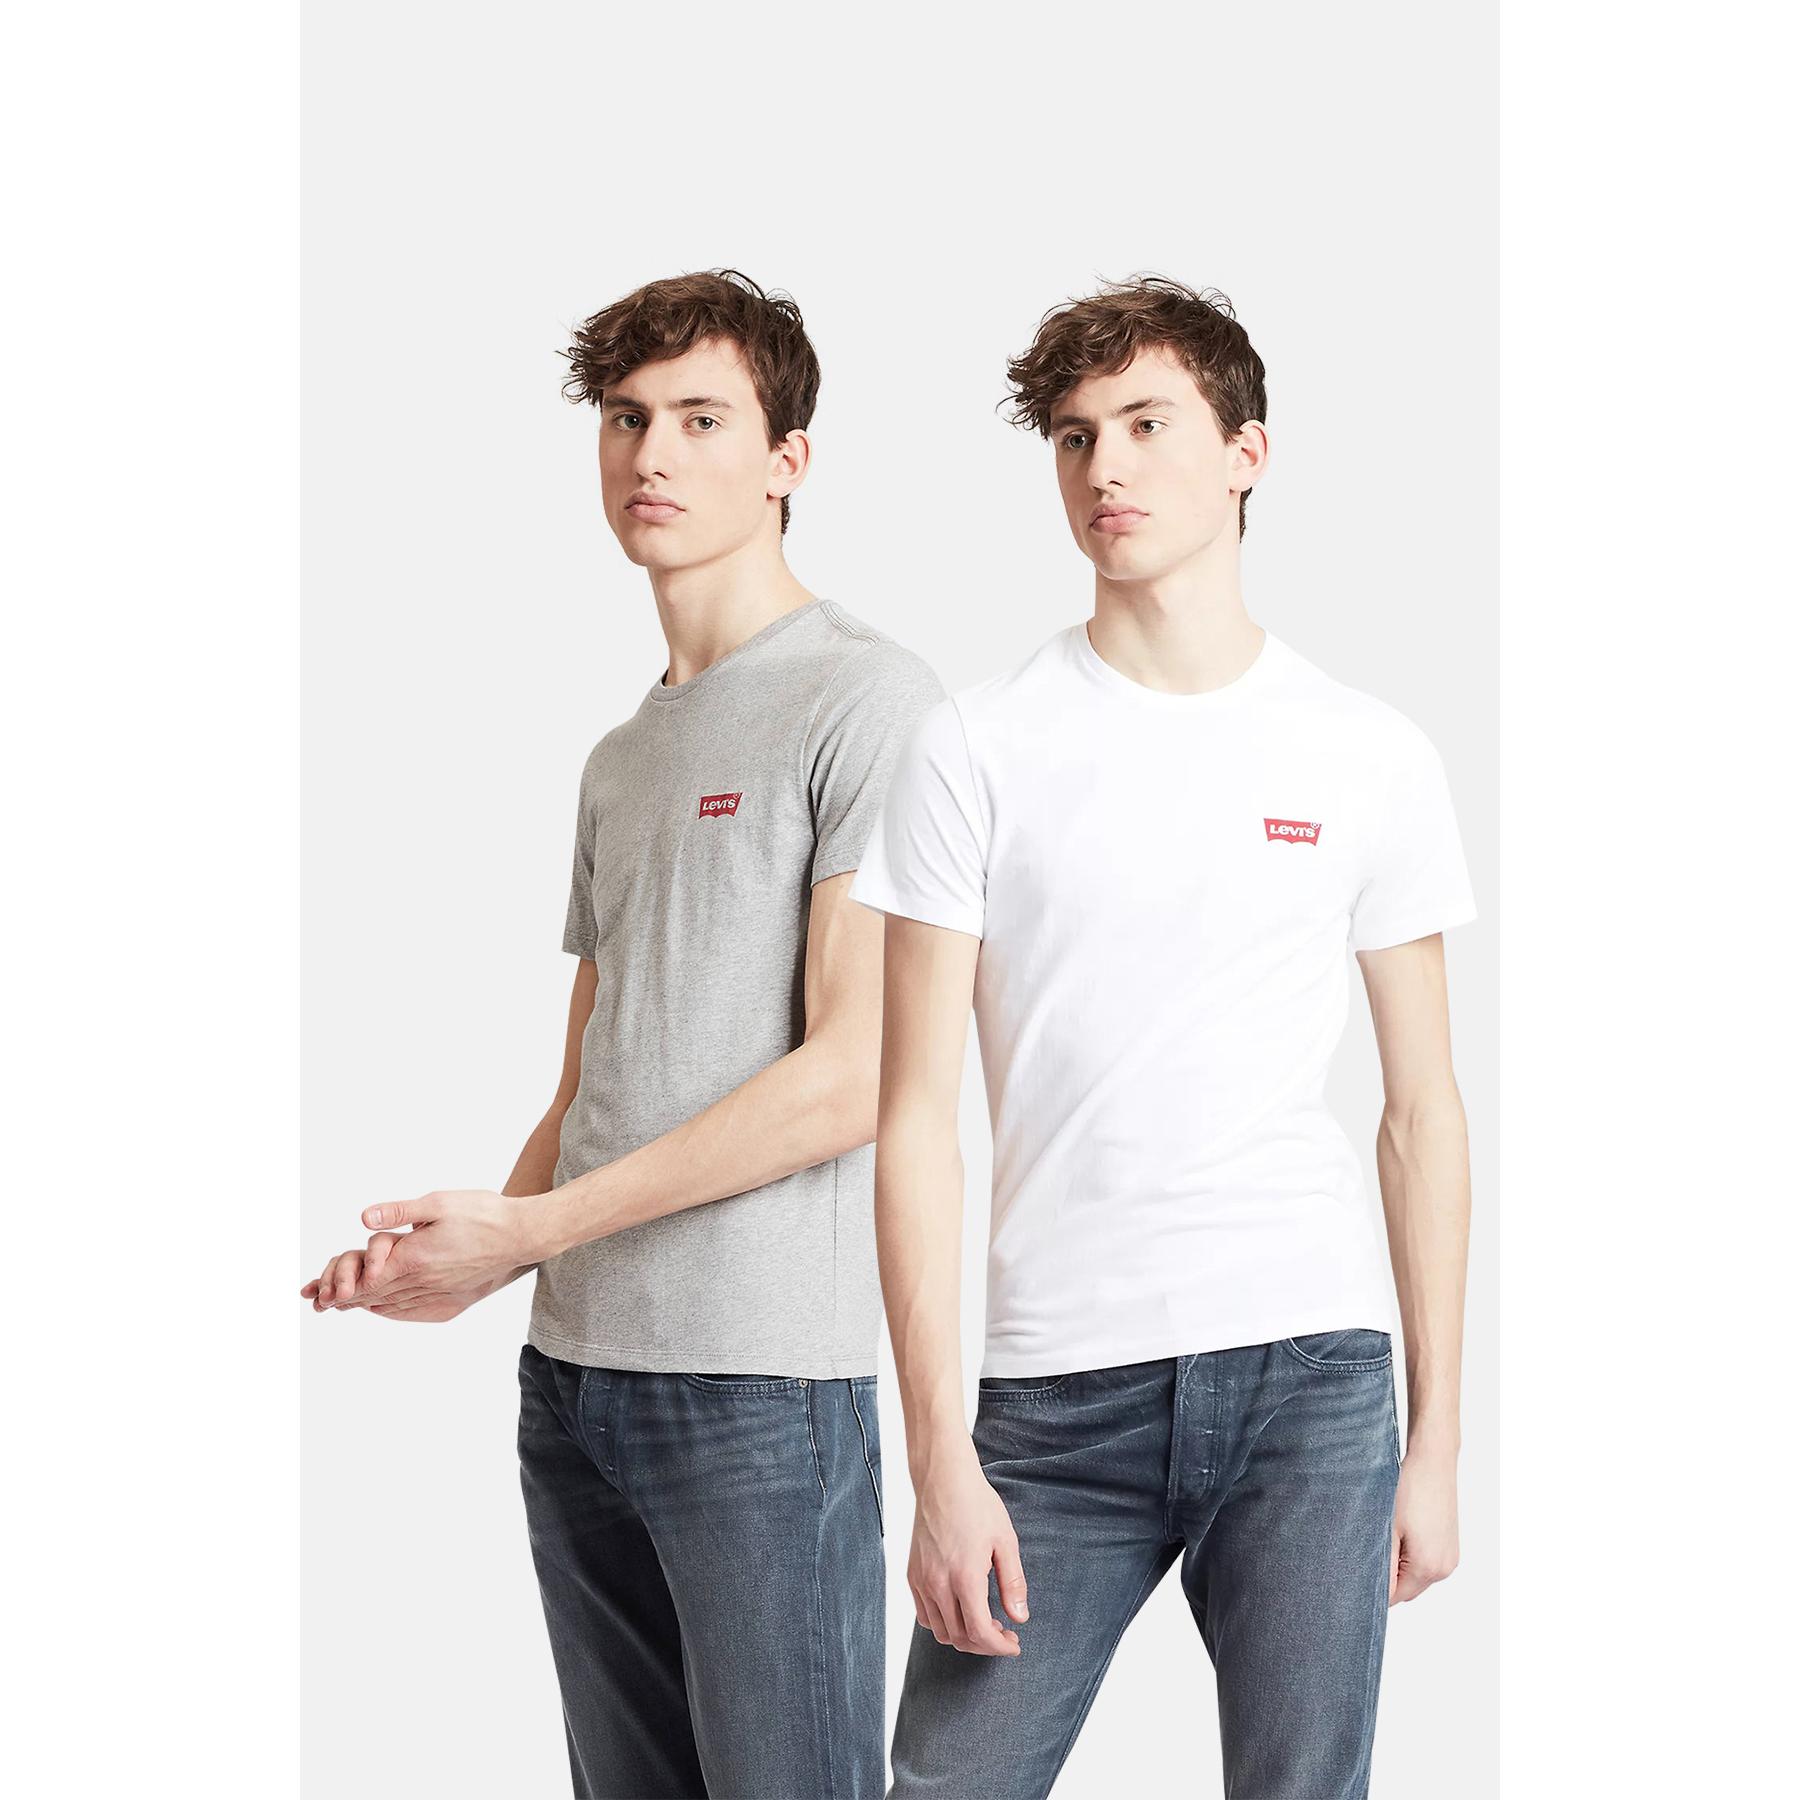 Levi's - Levi's Camiseta Slim Fit para Hombre Pack de 2, Crewneck Graphic Tee, Blanca y Gris con logo